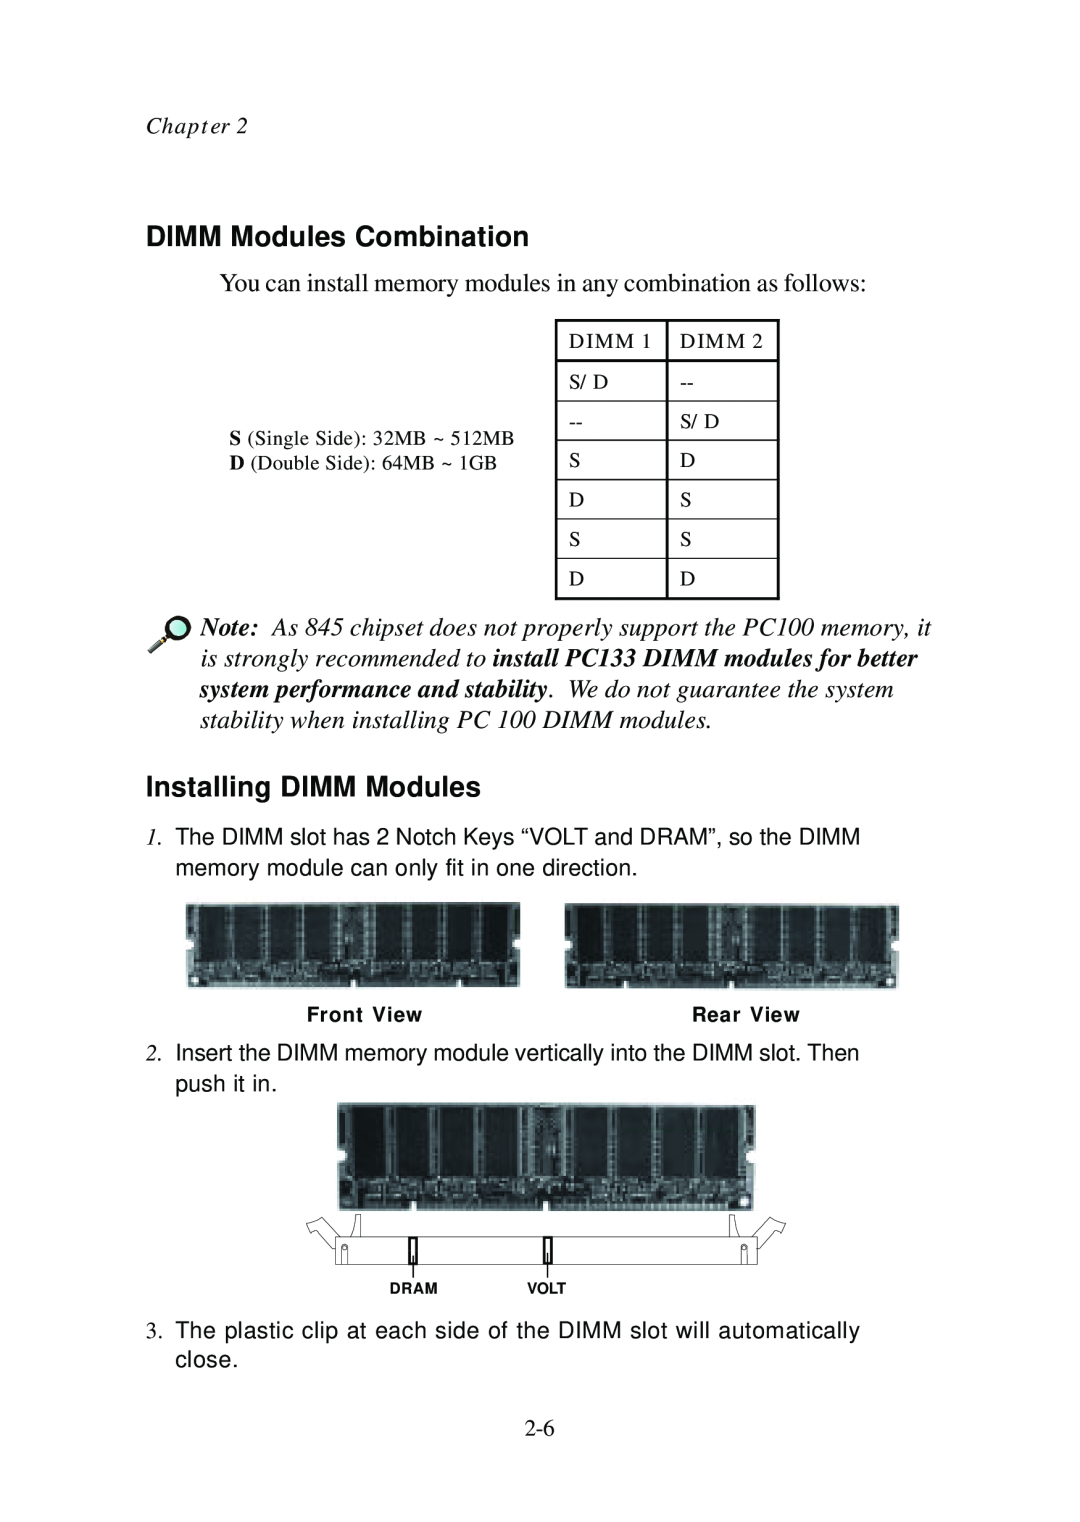 Premio Computer Aries/Centella manual DIMM Modules Combination, Installing DIMM Modules 